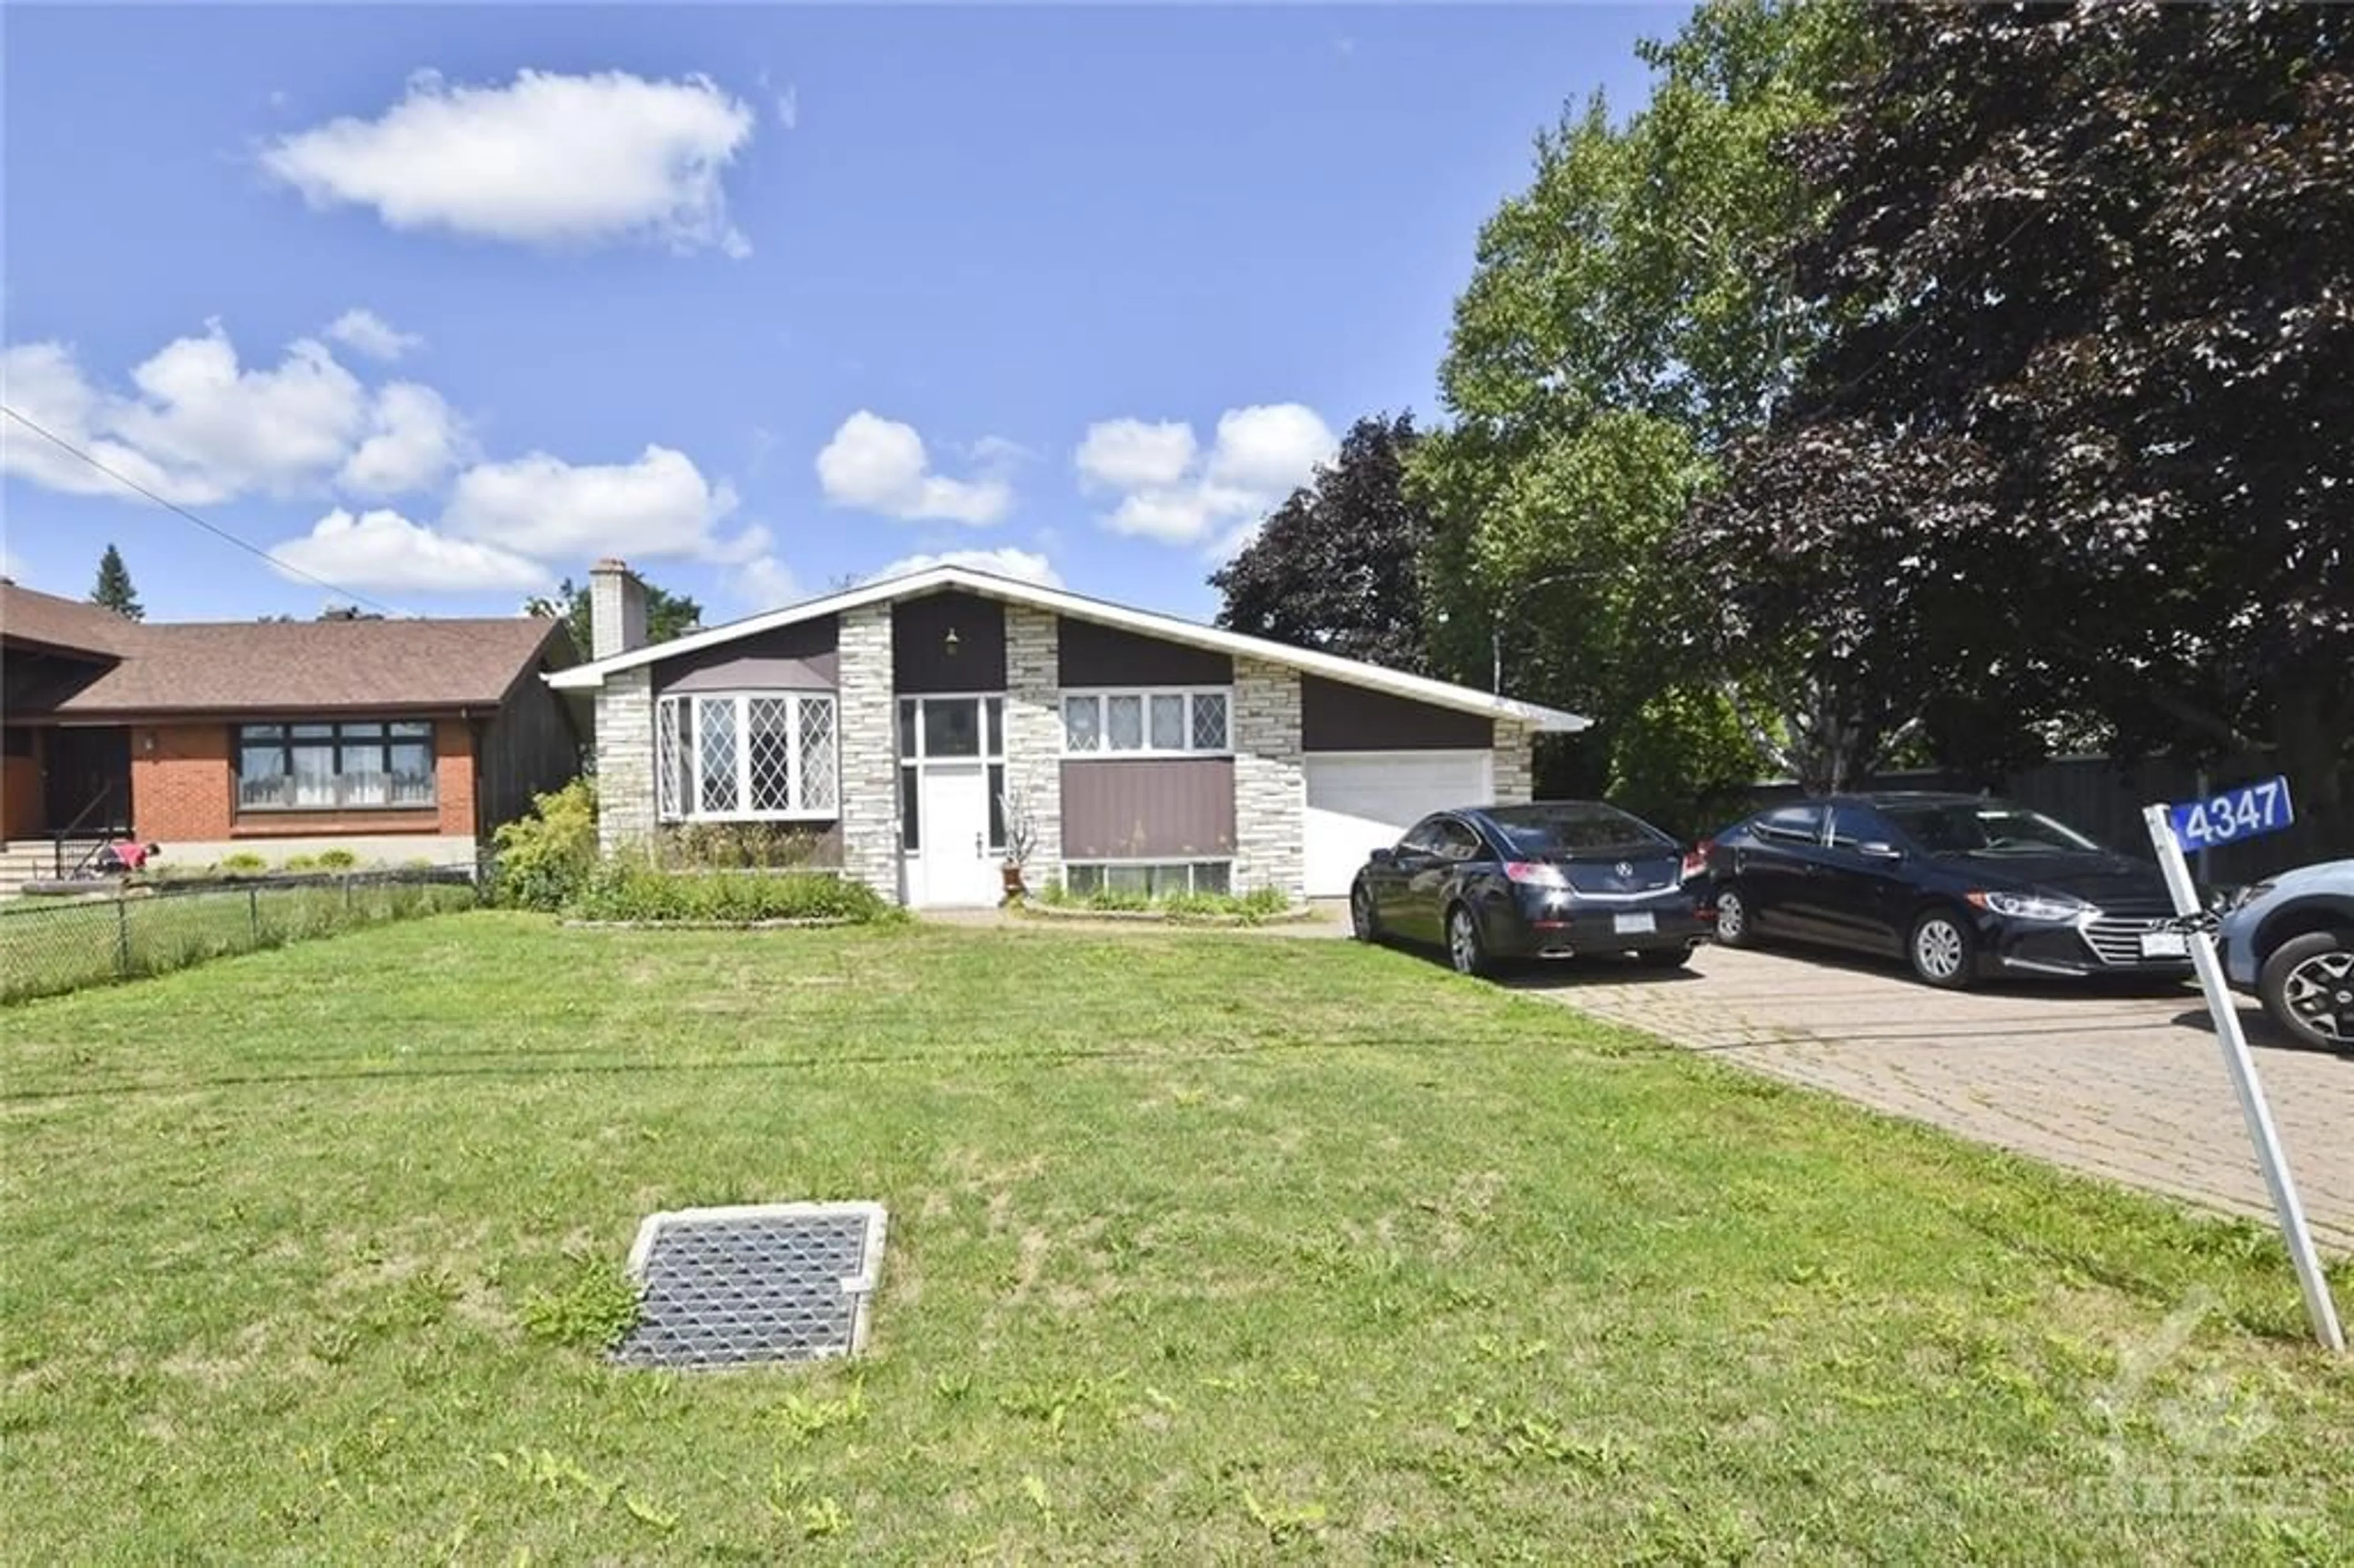 Frontside or backside of a home for 4347 INNES Rd, Ottawa Ontario K1C 1T1